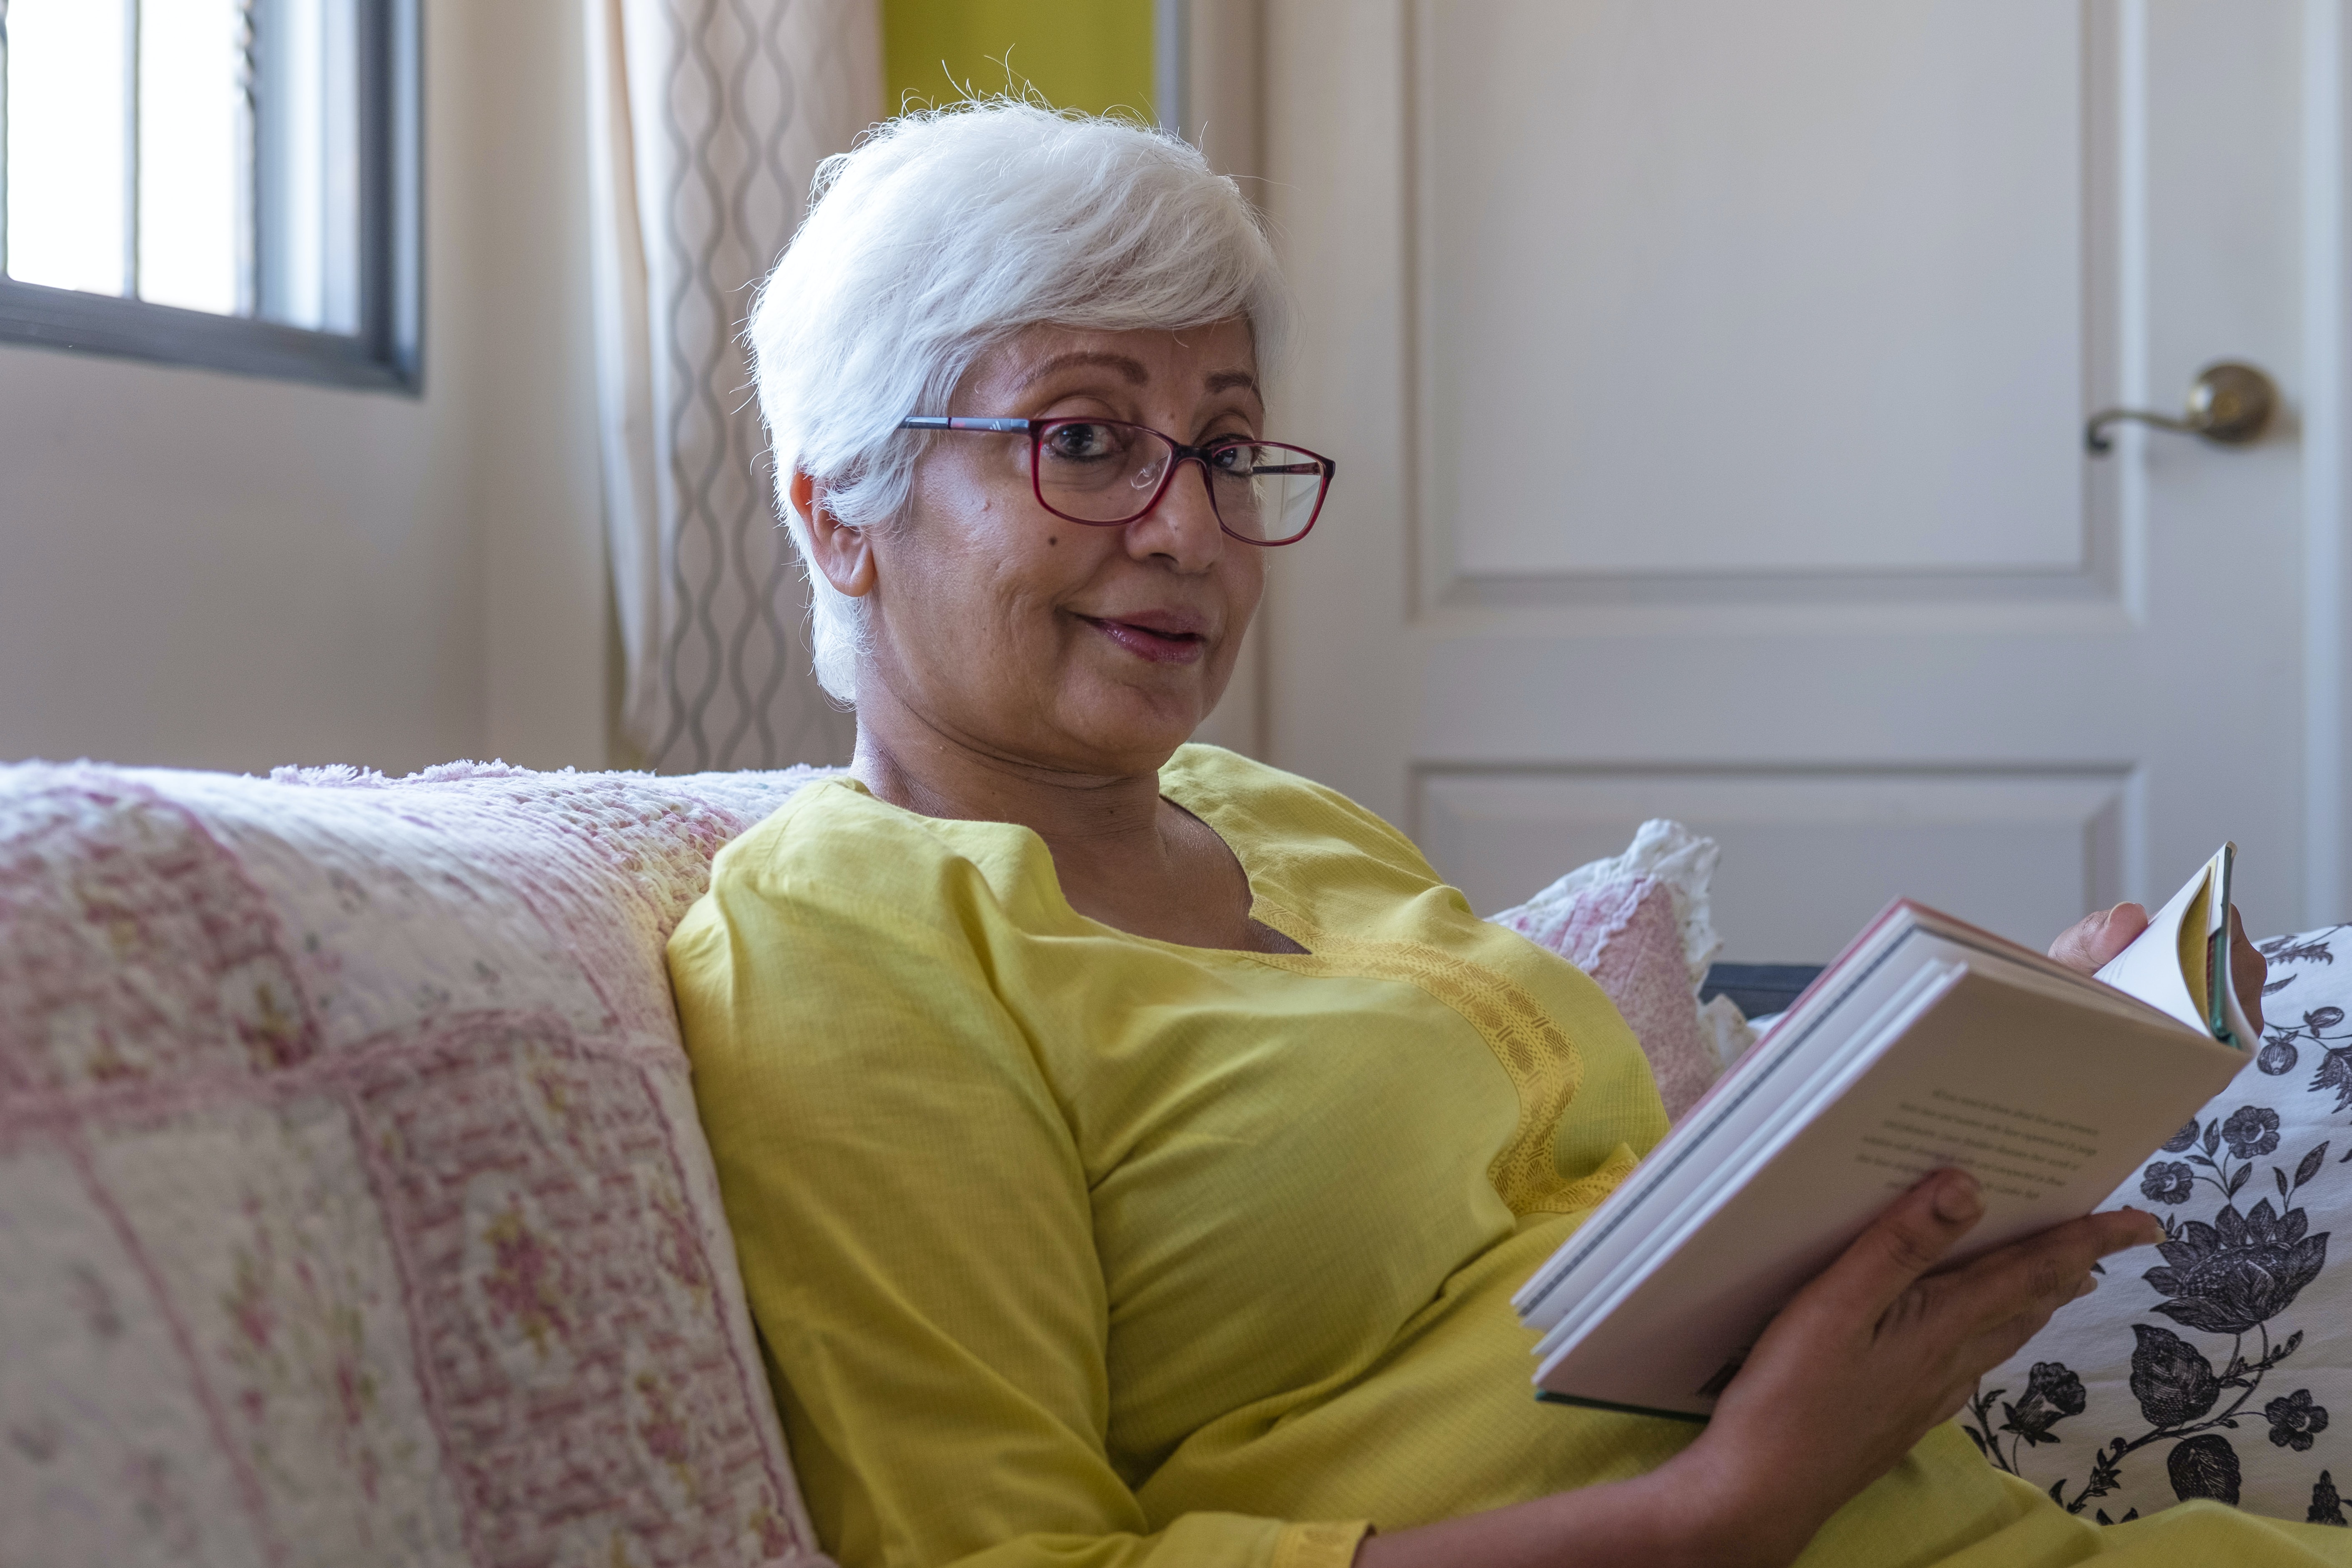 11 great digital reads for senior citizens